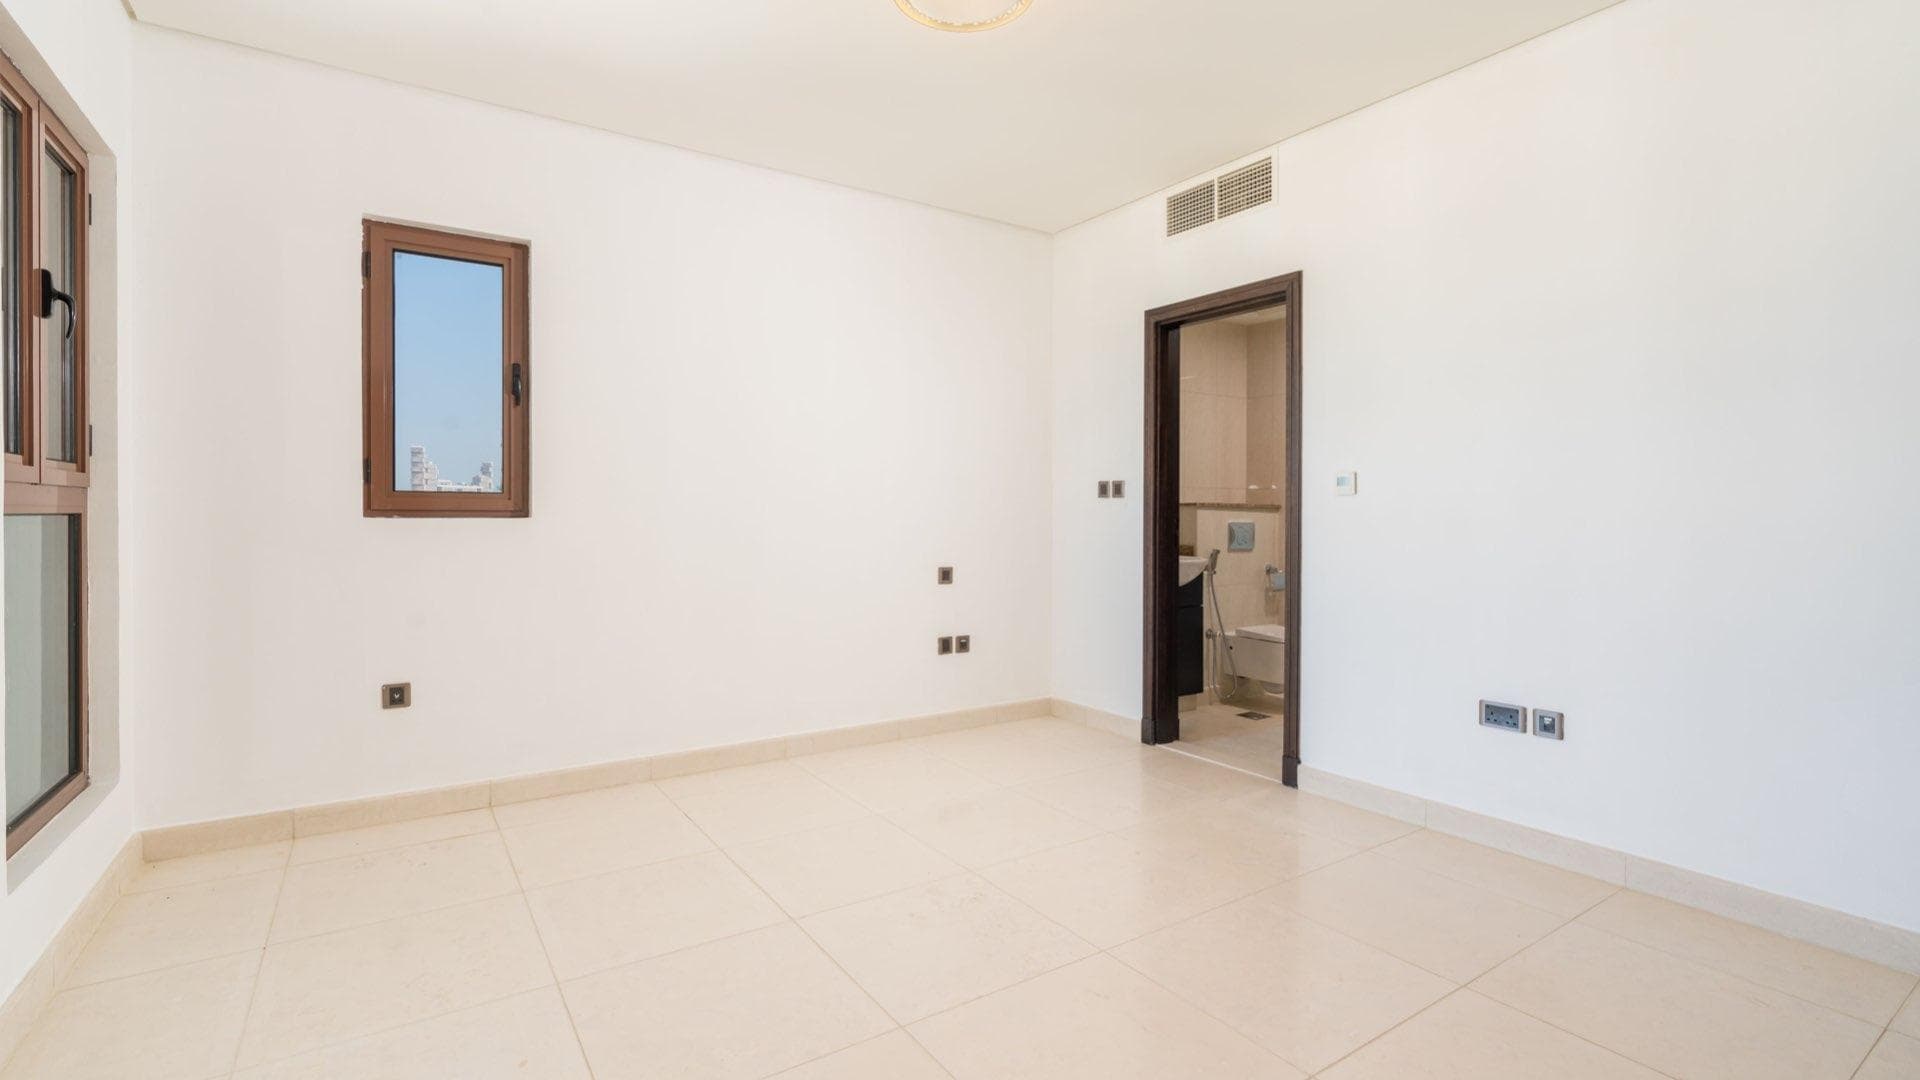 3 Bedroom Apartment For Rent Kingdom Of Sheba Lp20972 C915683f5407c80.jpg